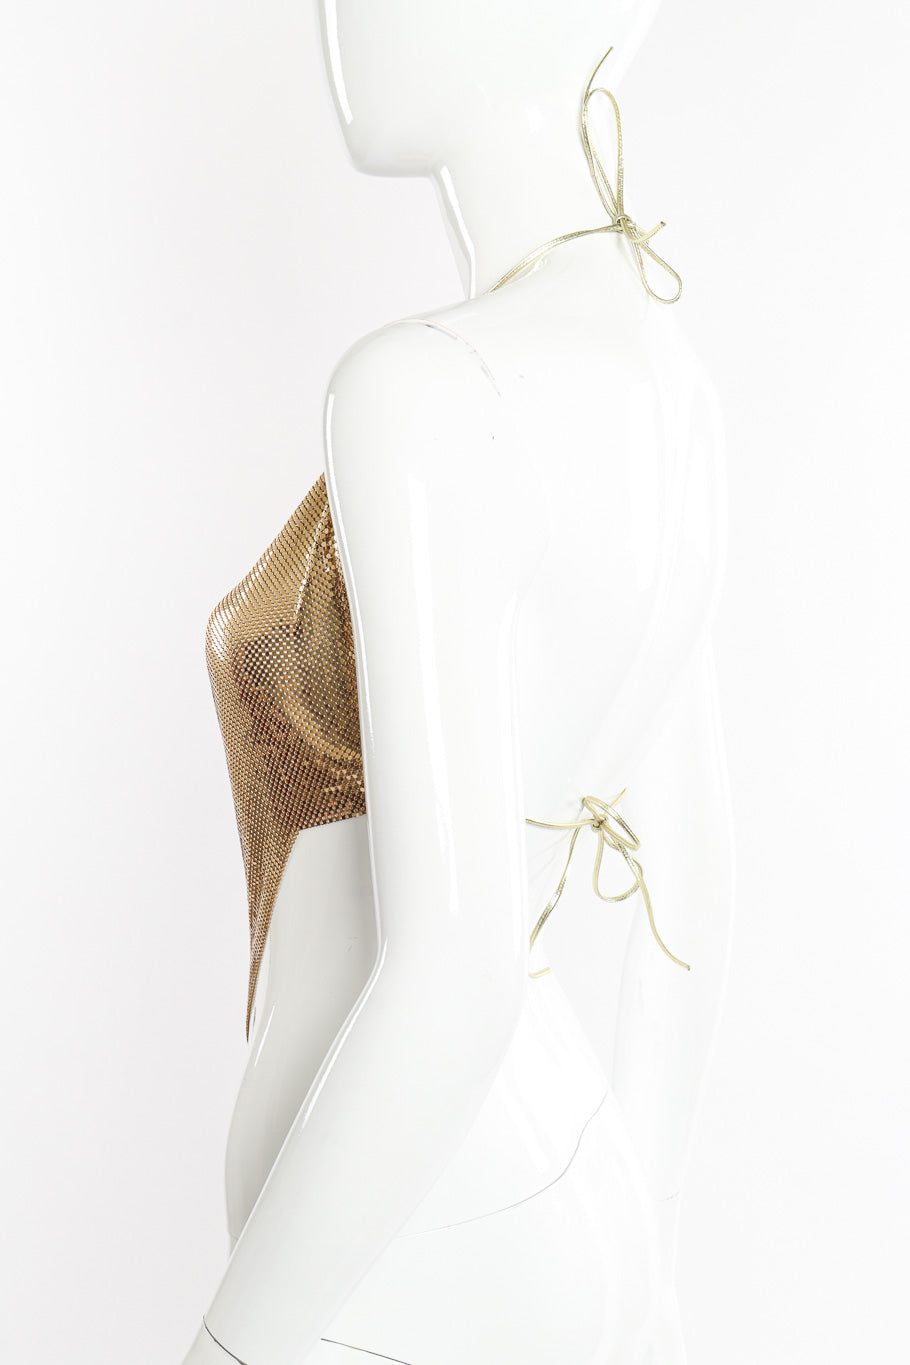 Vintage Whiting & Davis Gold Mesh Halter Top back view on mannequin closeup @Recessla